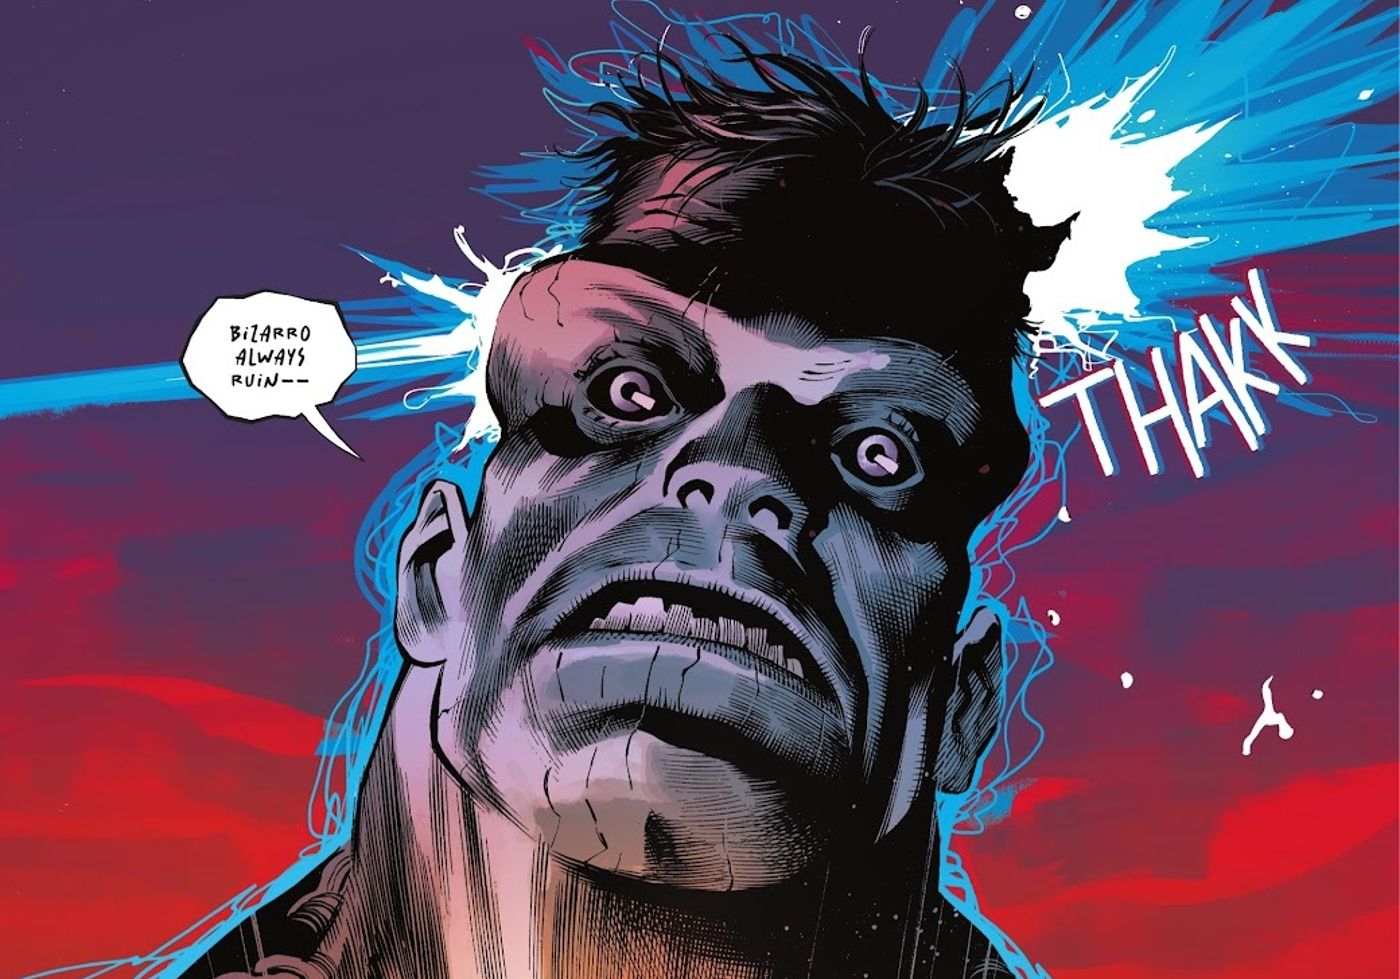 Bizarro's Death from a Blue Kryptonite bullet in Suicide Squad: Dream Team #4